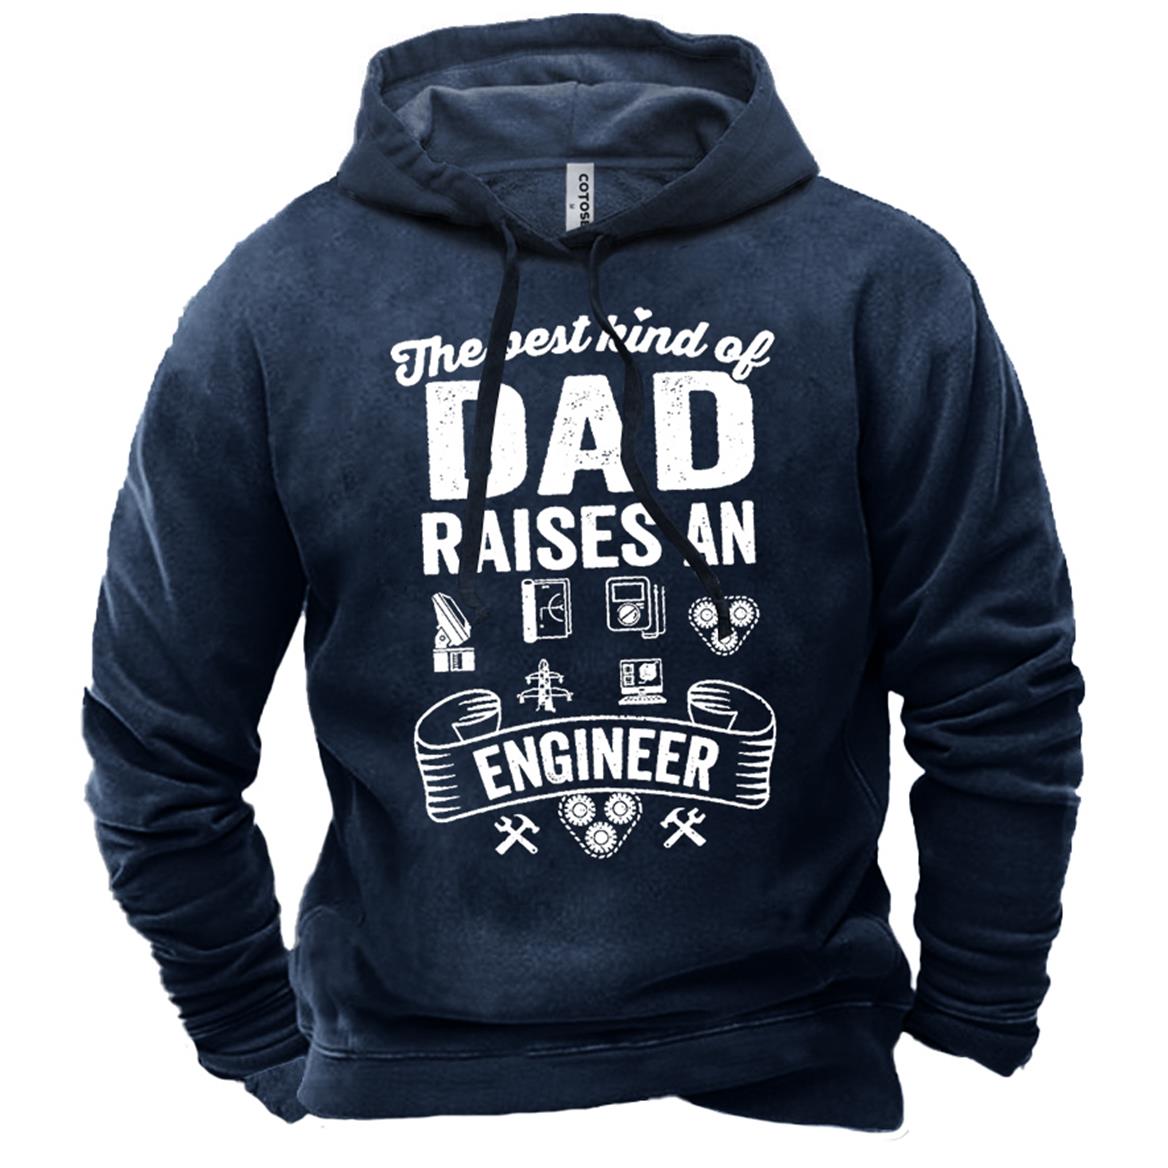 Men's The Best Kind Chic Of Dad Raises An Engineer Hoodie